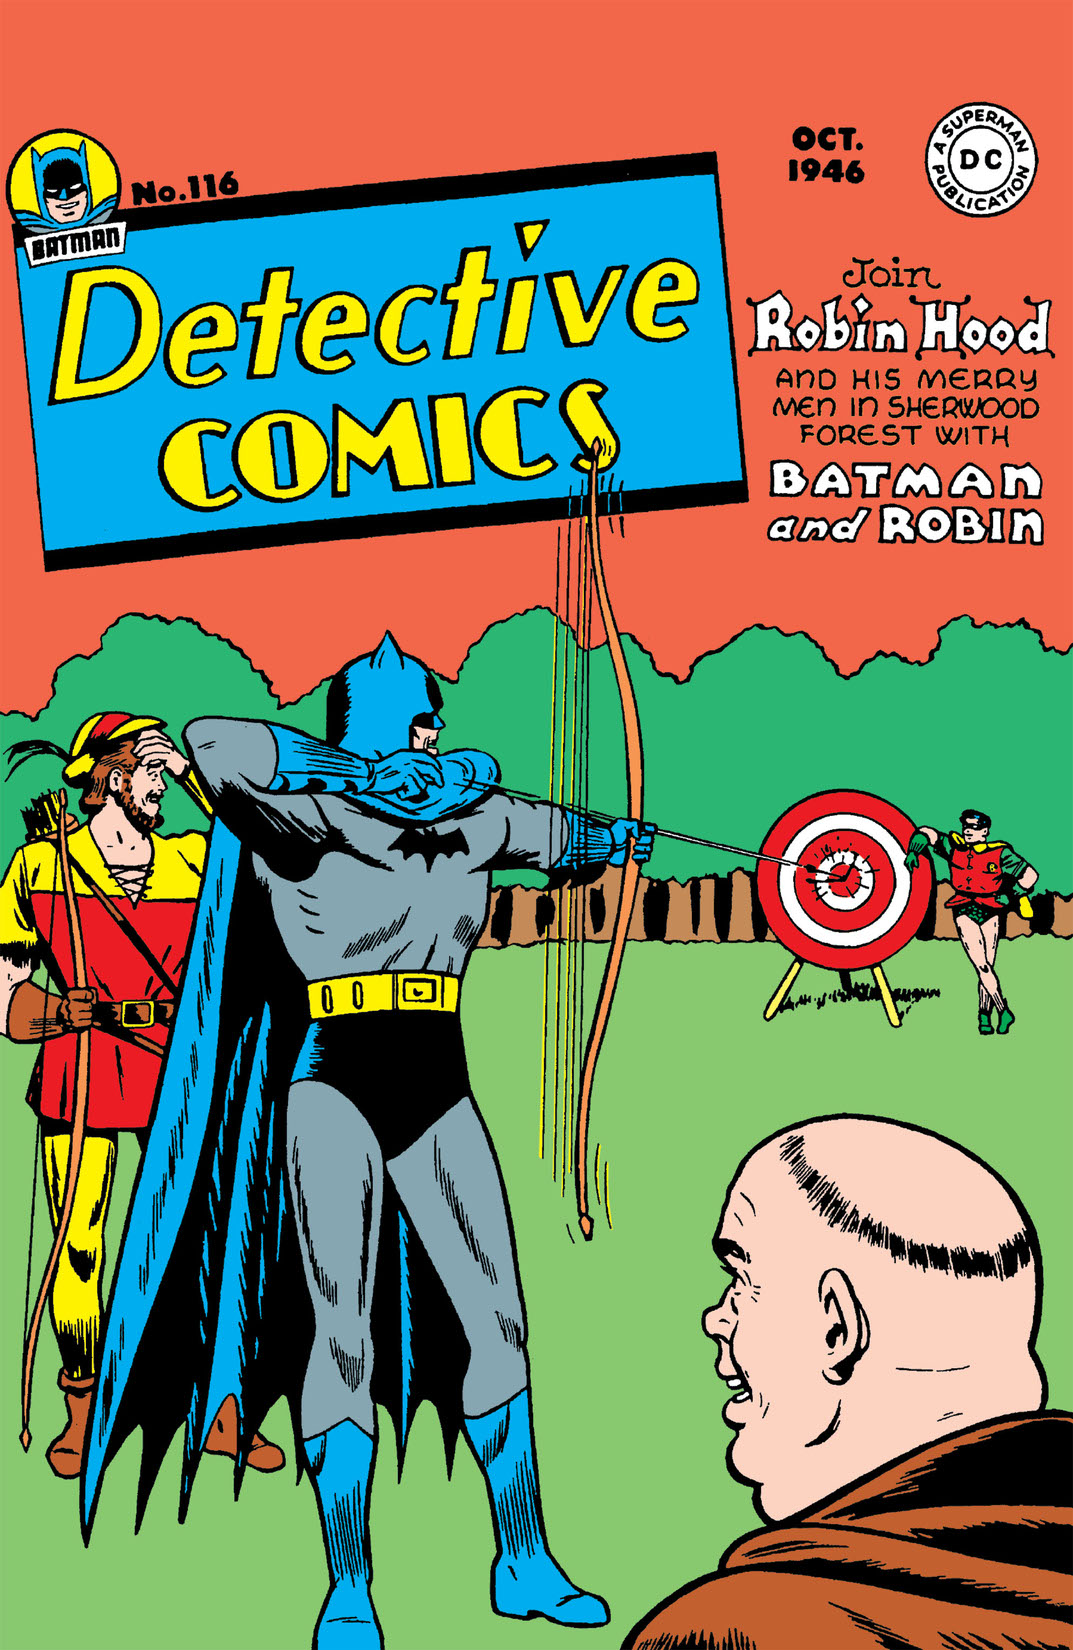 Detective Comics (1937-) #116 preview images